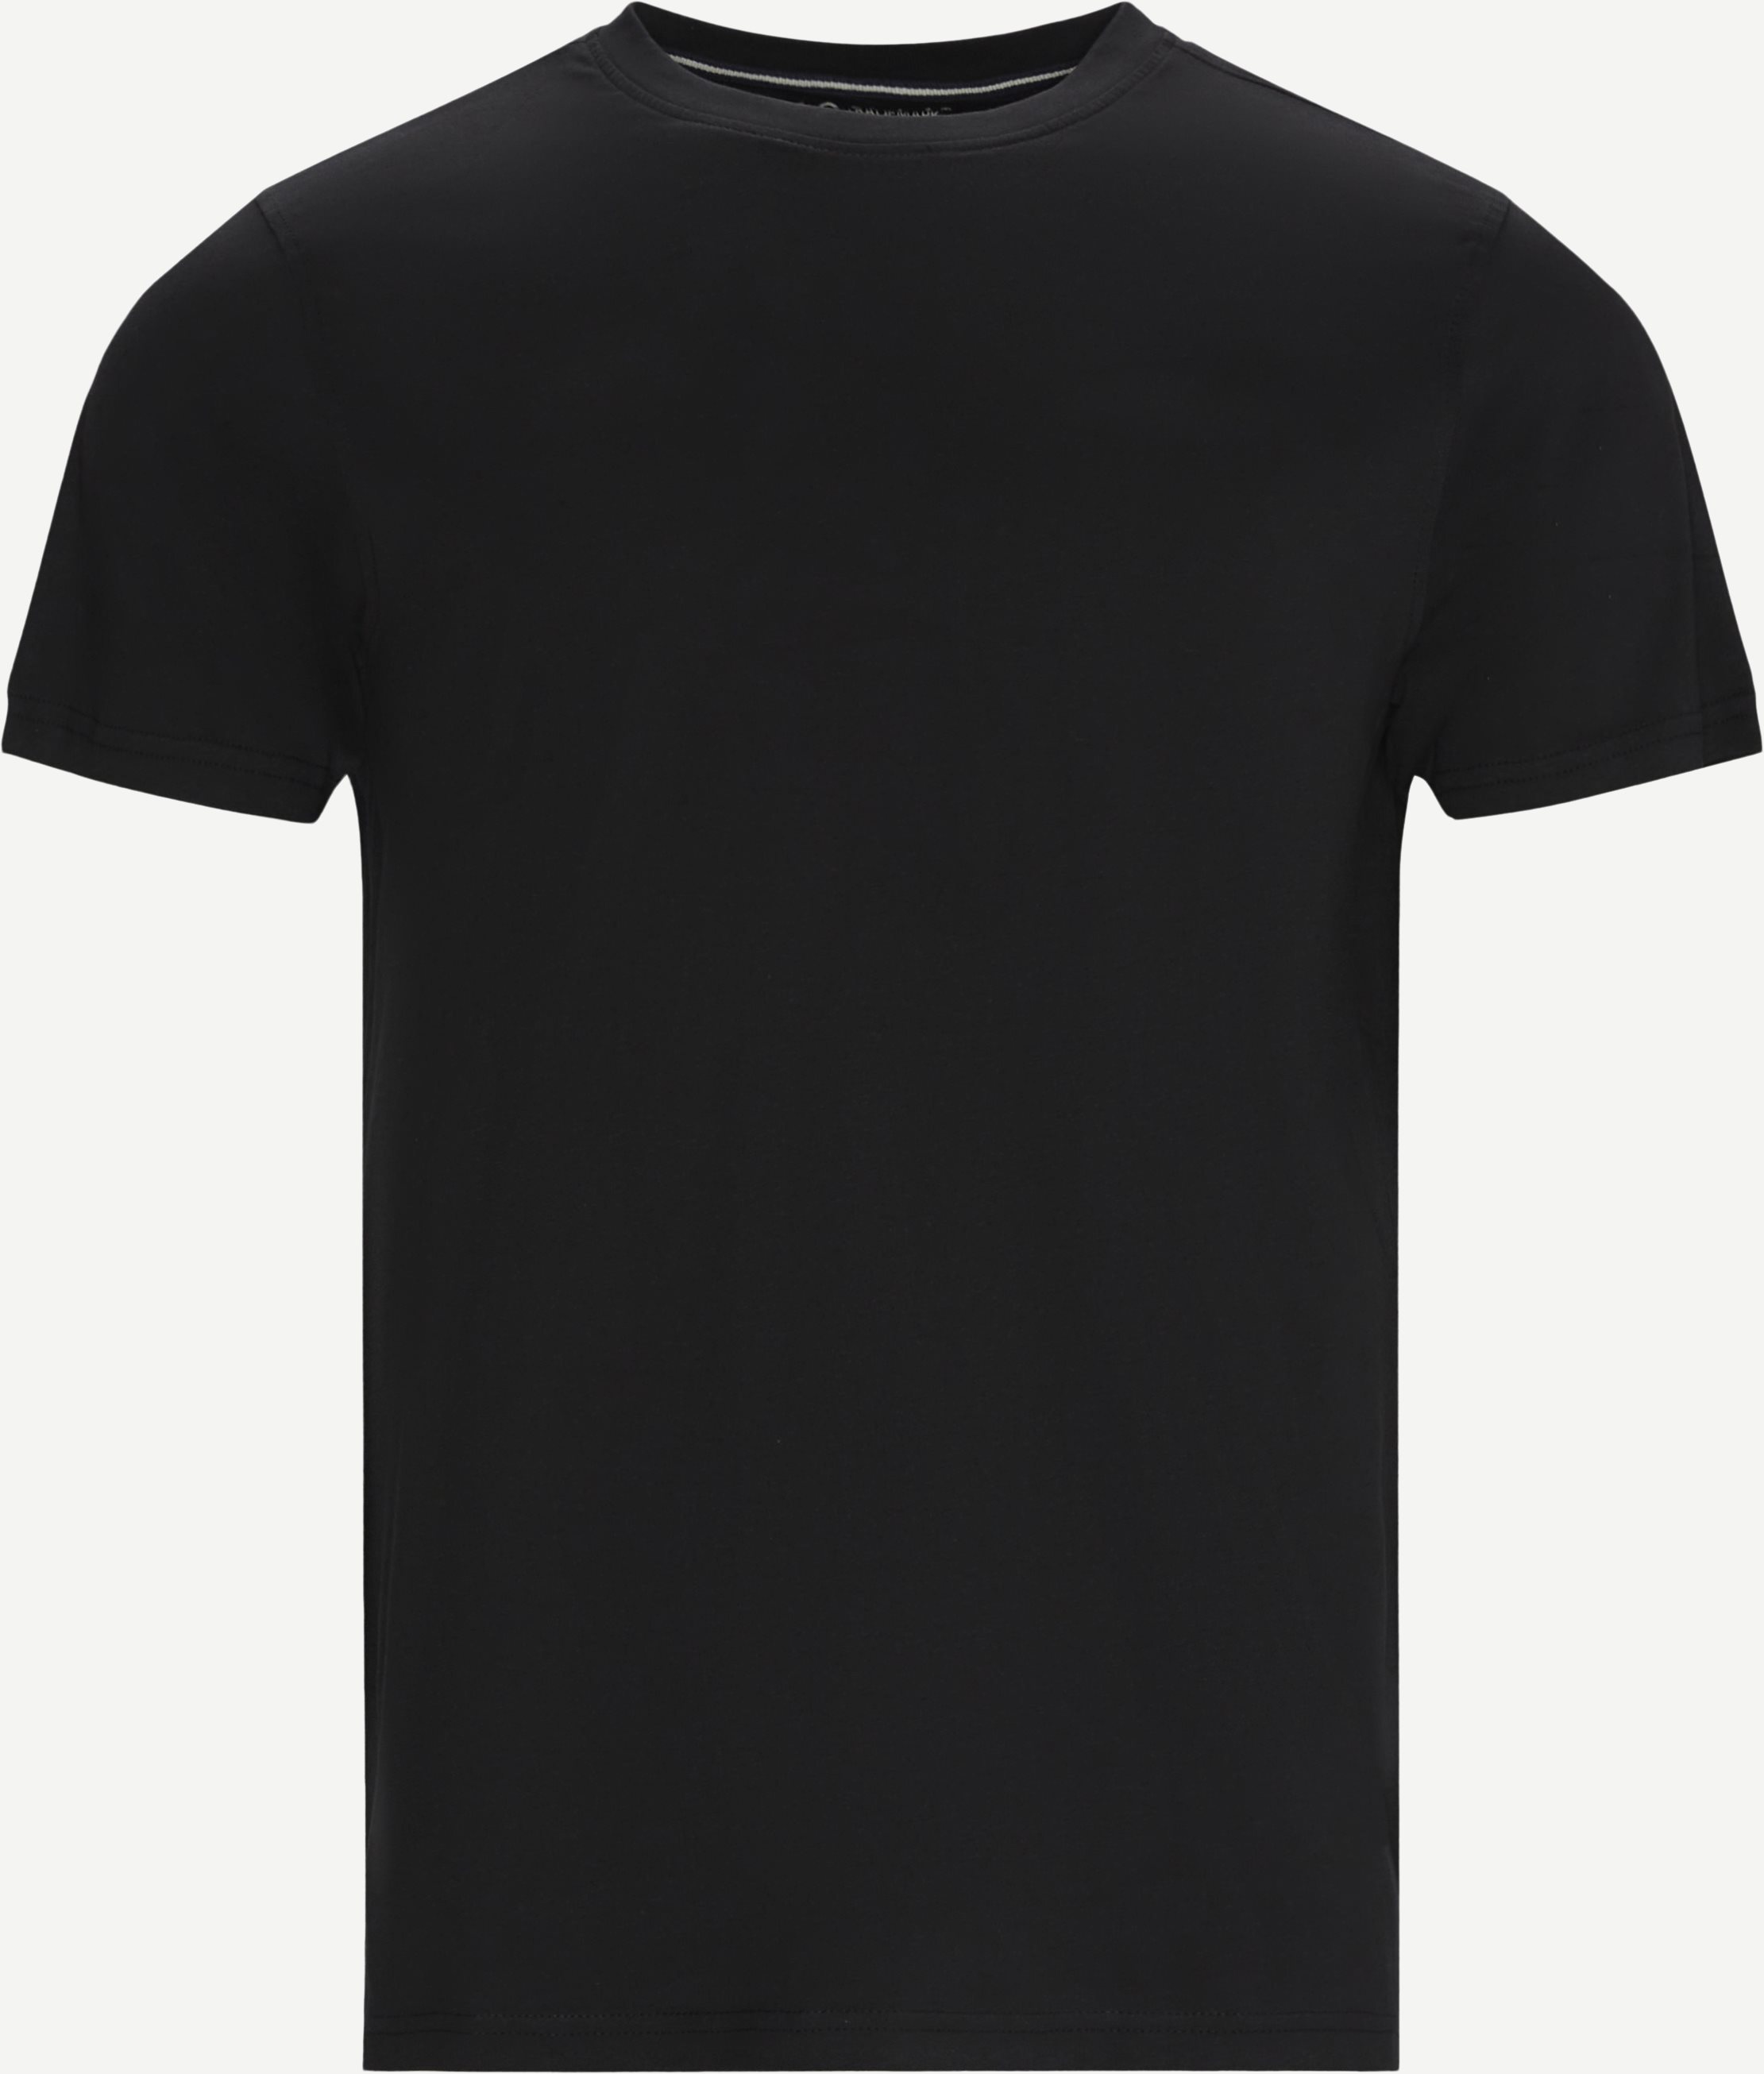 Wayne T-shirt - T-shirts - Regular fit - Black